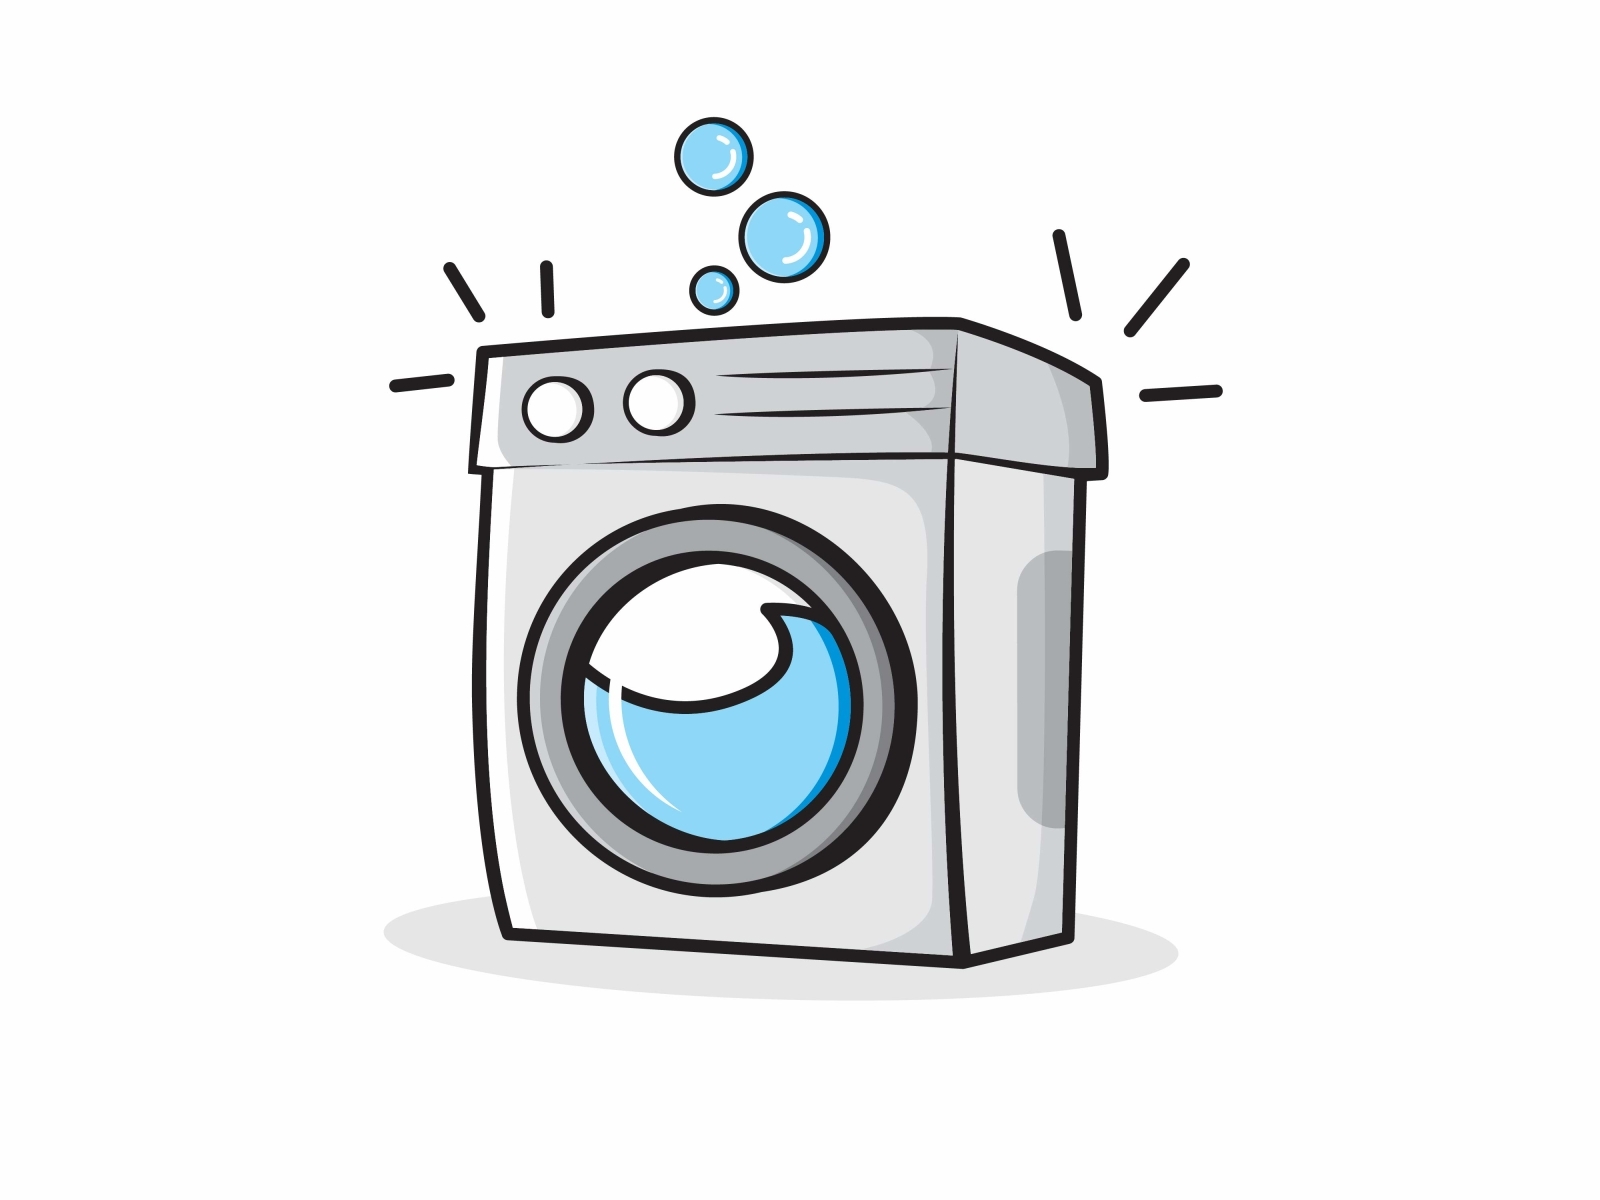 Washing machine cartoon illustration vector by VEEZA DESIGN on Dribbble